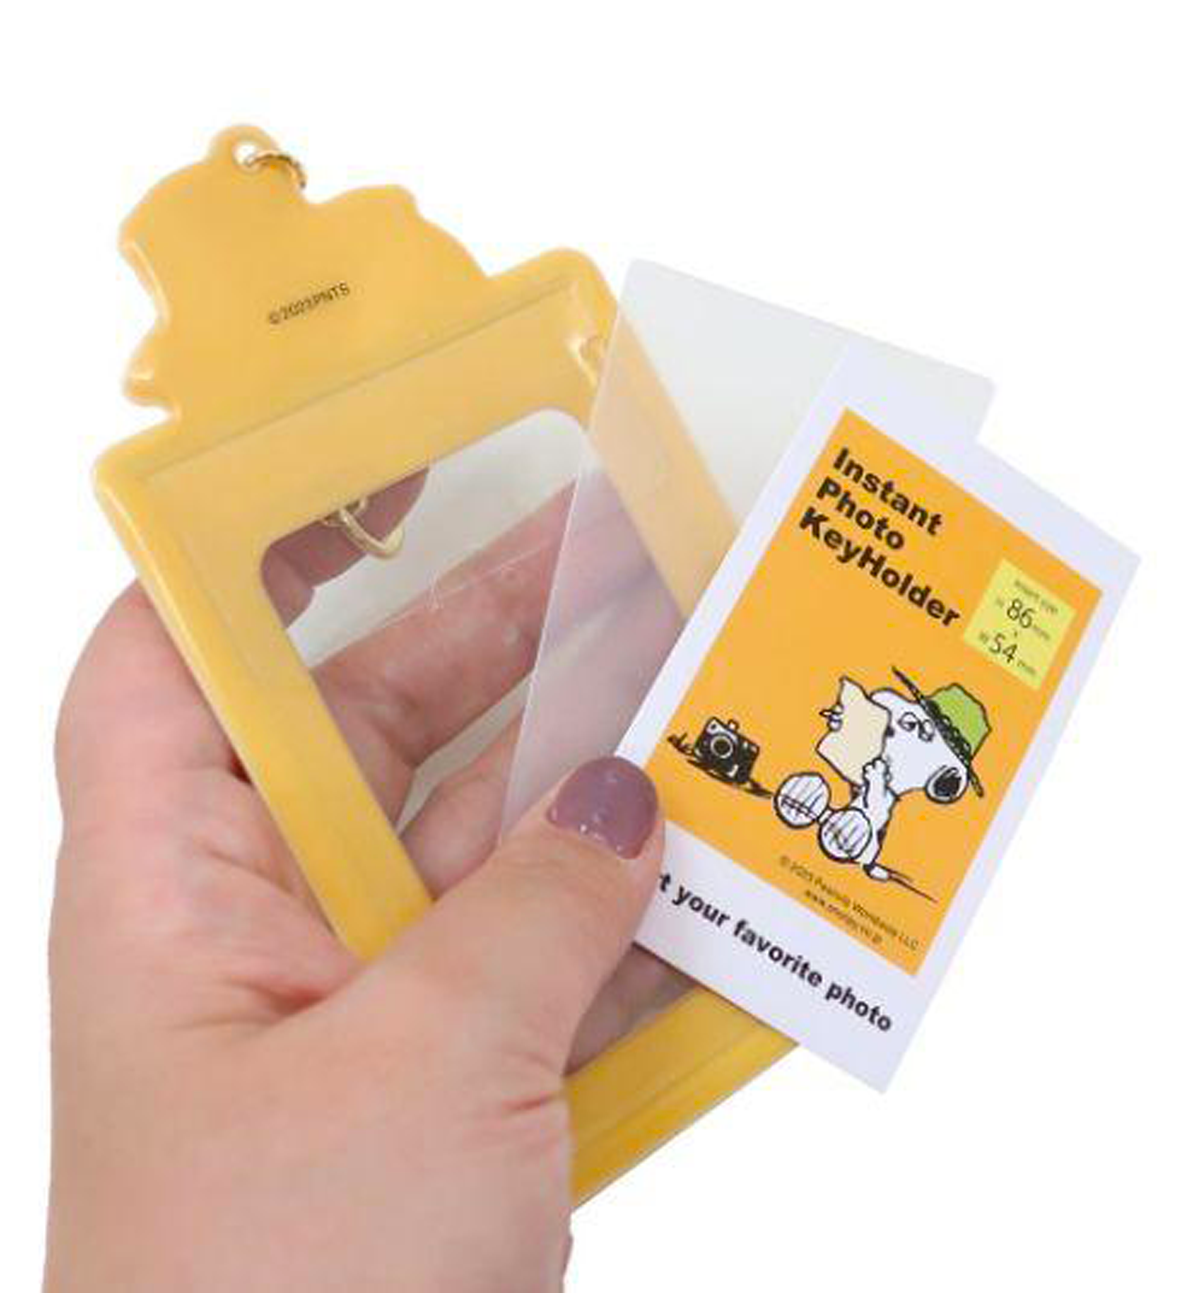 Snoopy & Friends Photocard Holder [Spike]